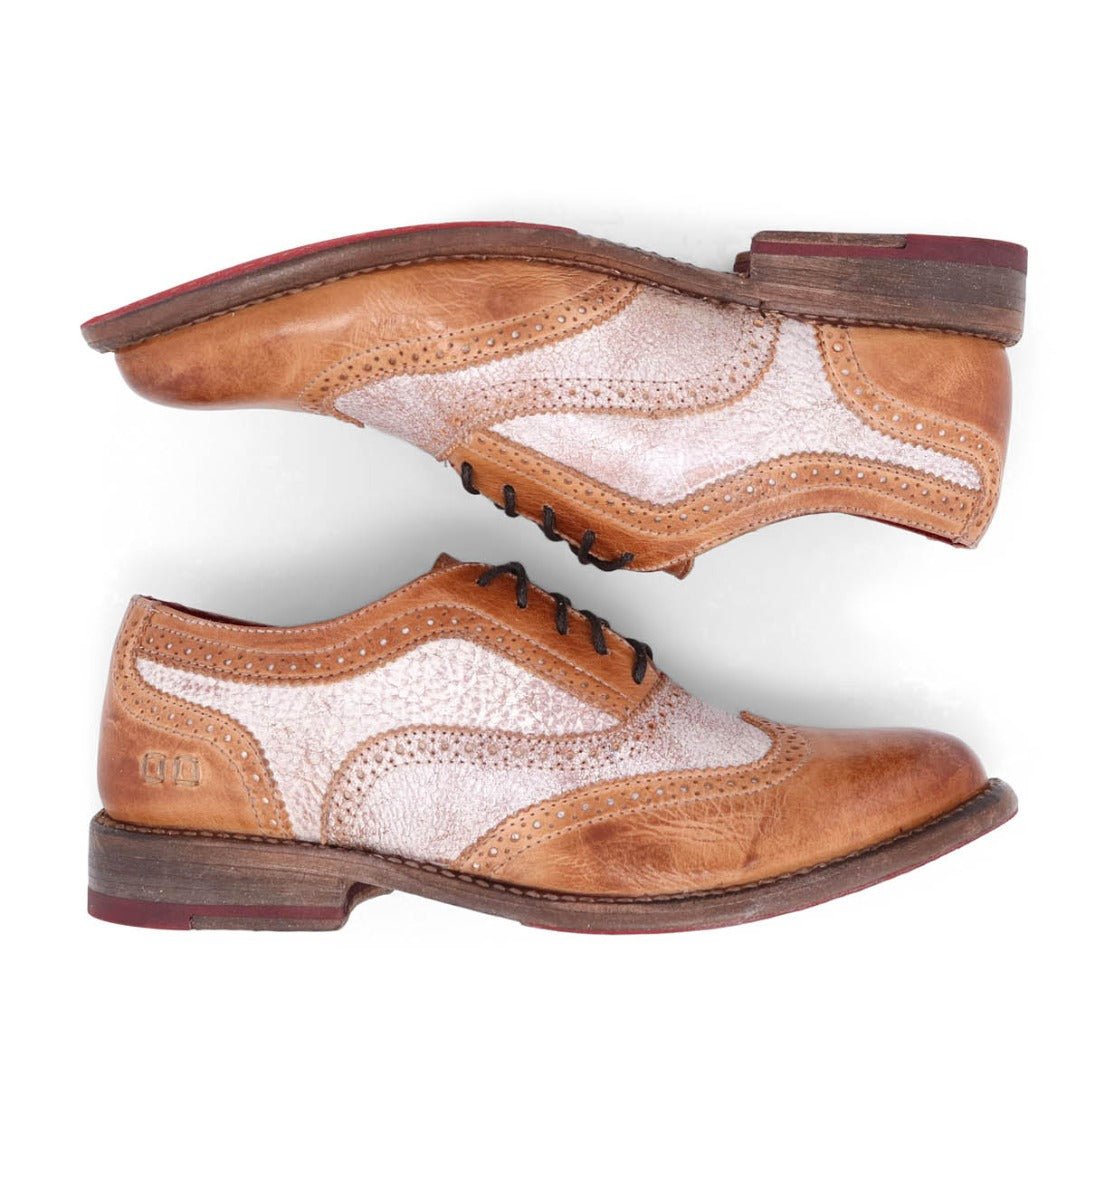 A pair of men's Bed Stu Lita tan wingtip oxford shoes.